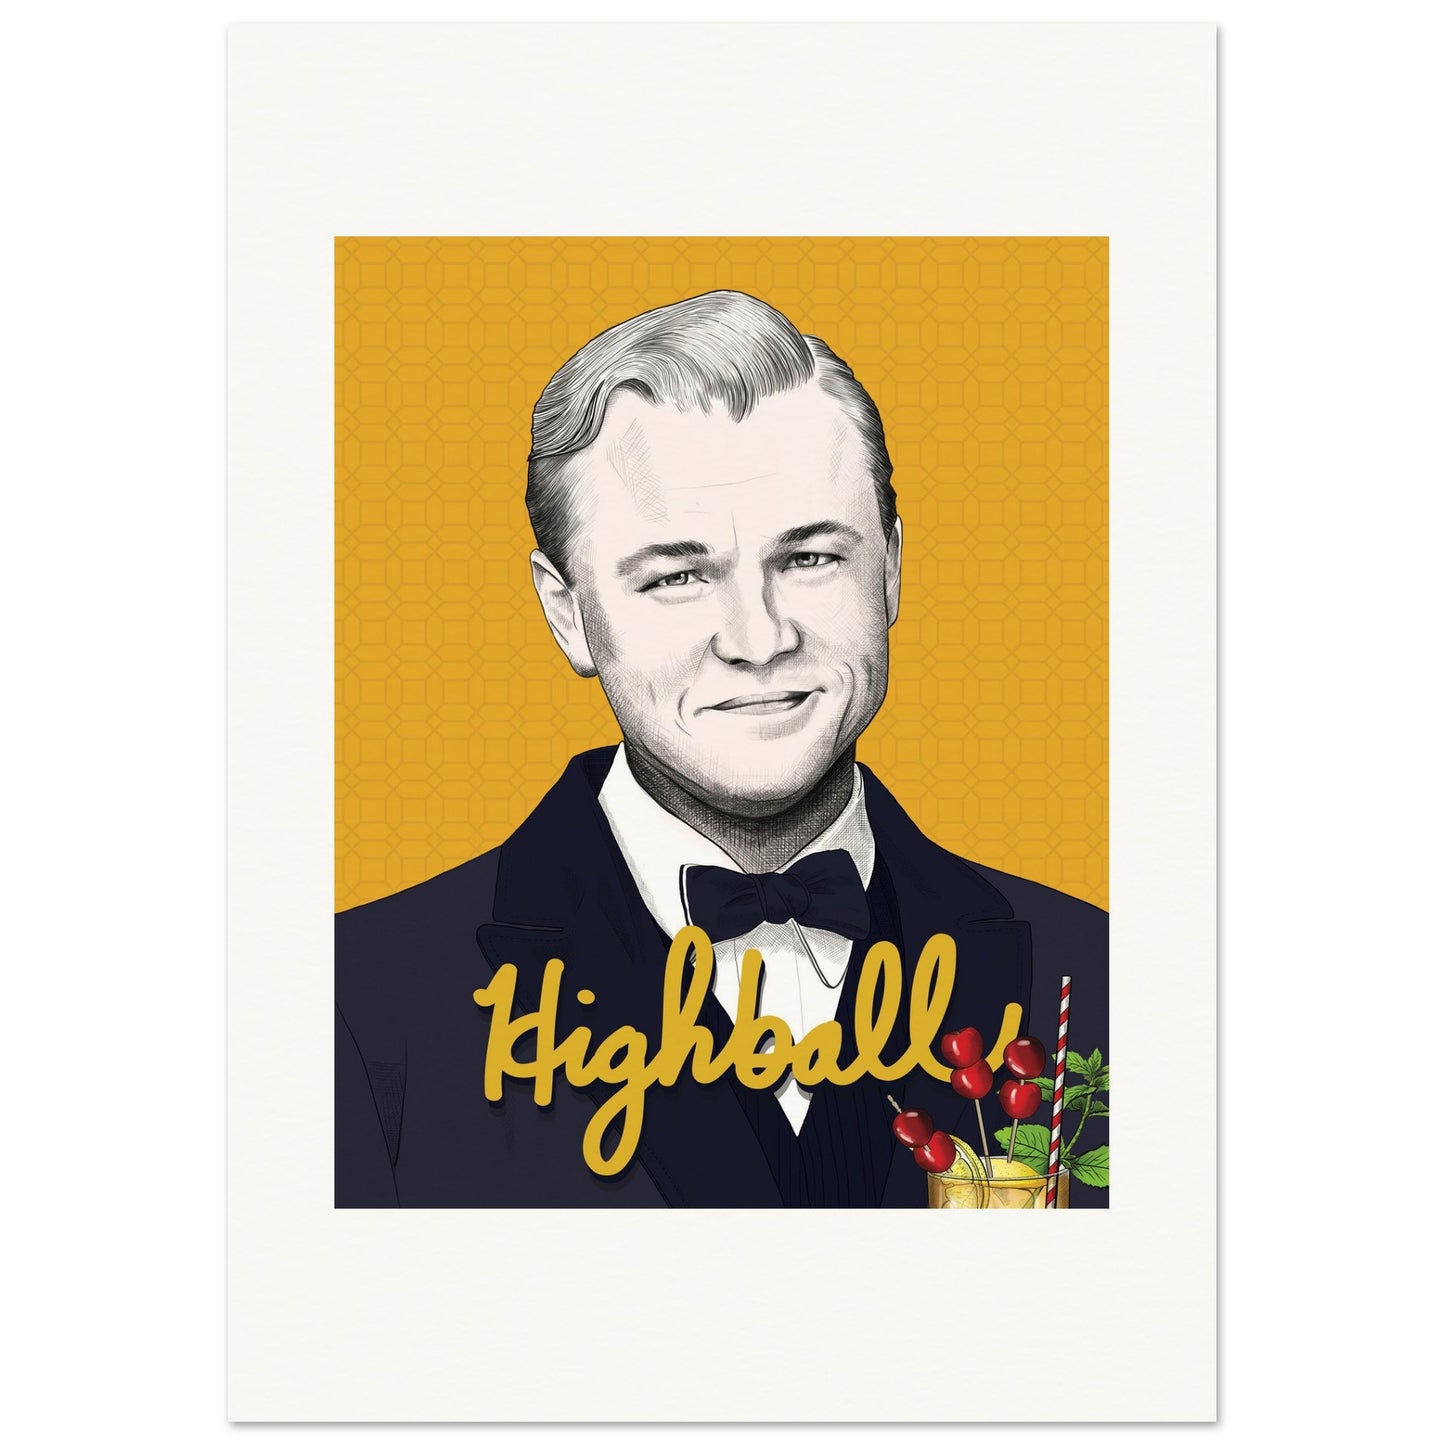 Highball | Leonardo DiCaprio | The Great Gatsby - Poster Print